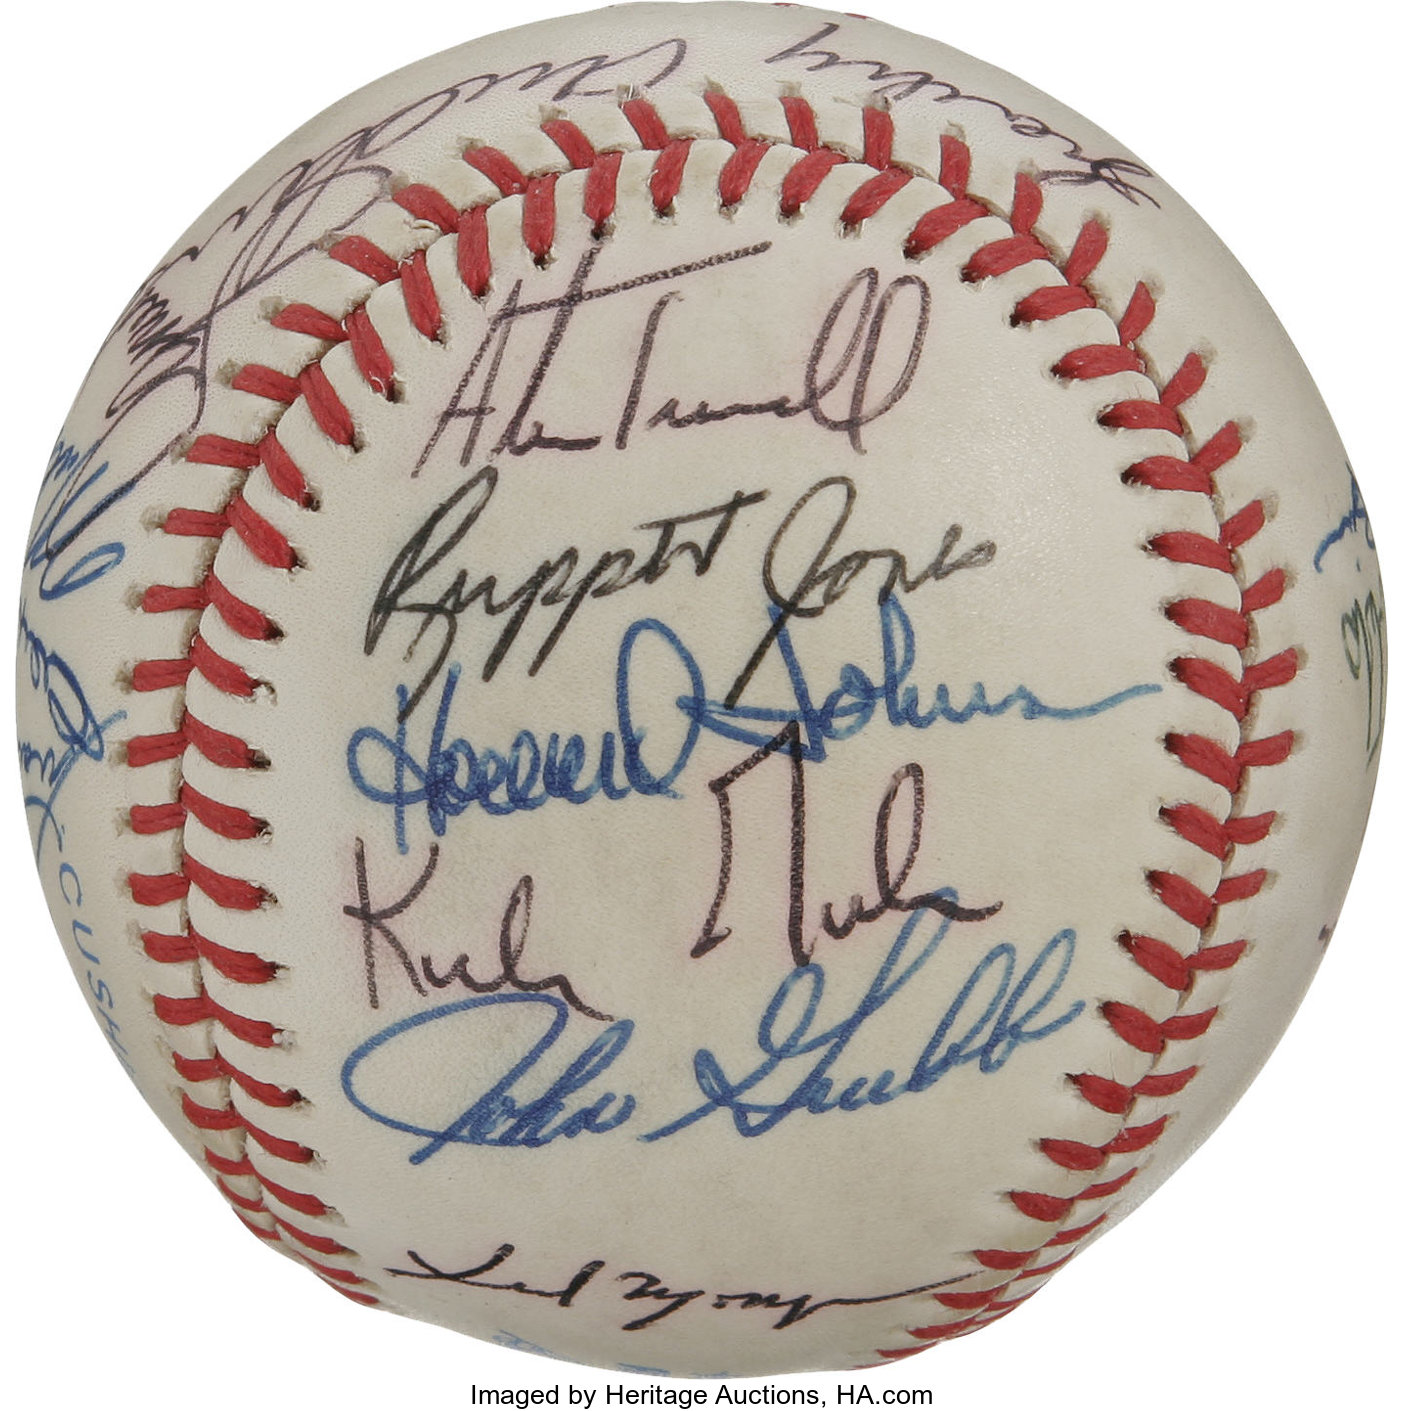 1984 Detroit Tigers Team World Champion Signed Baseball. Under the